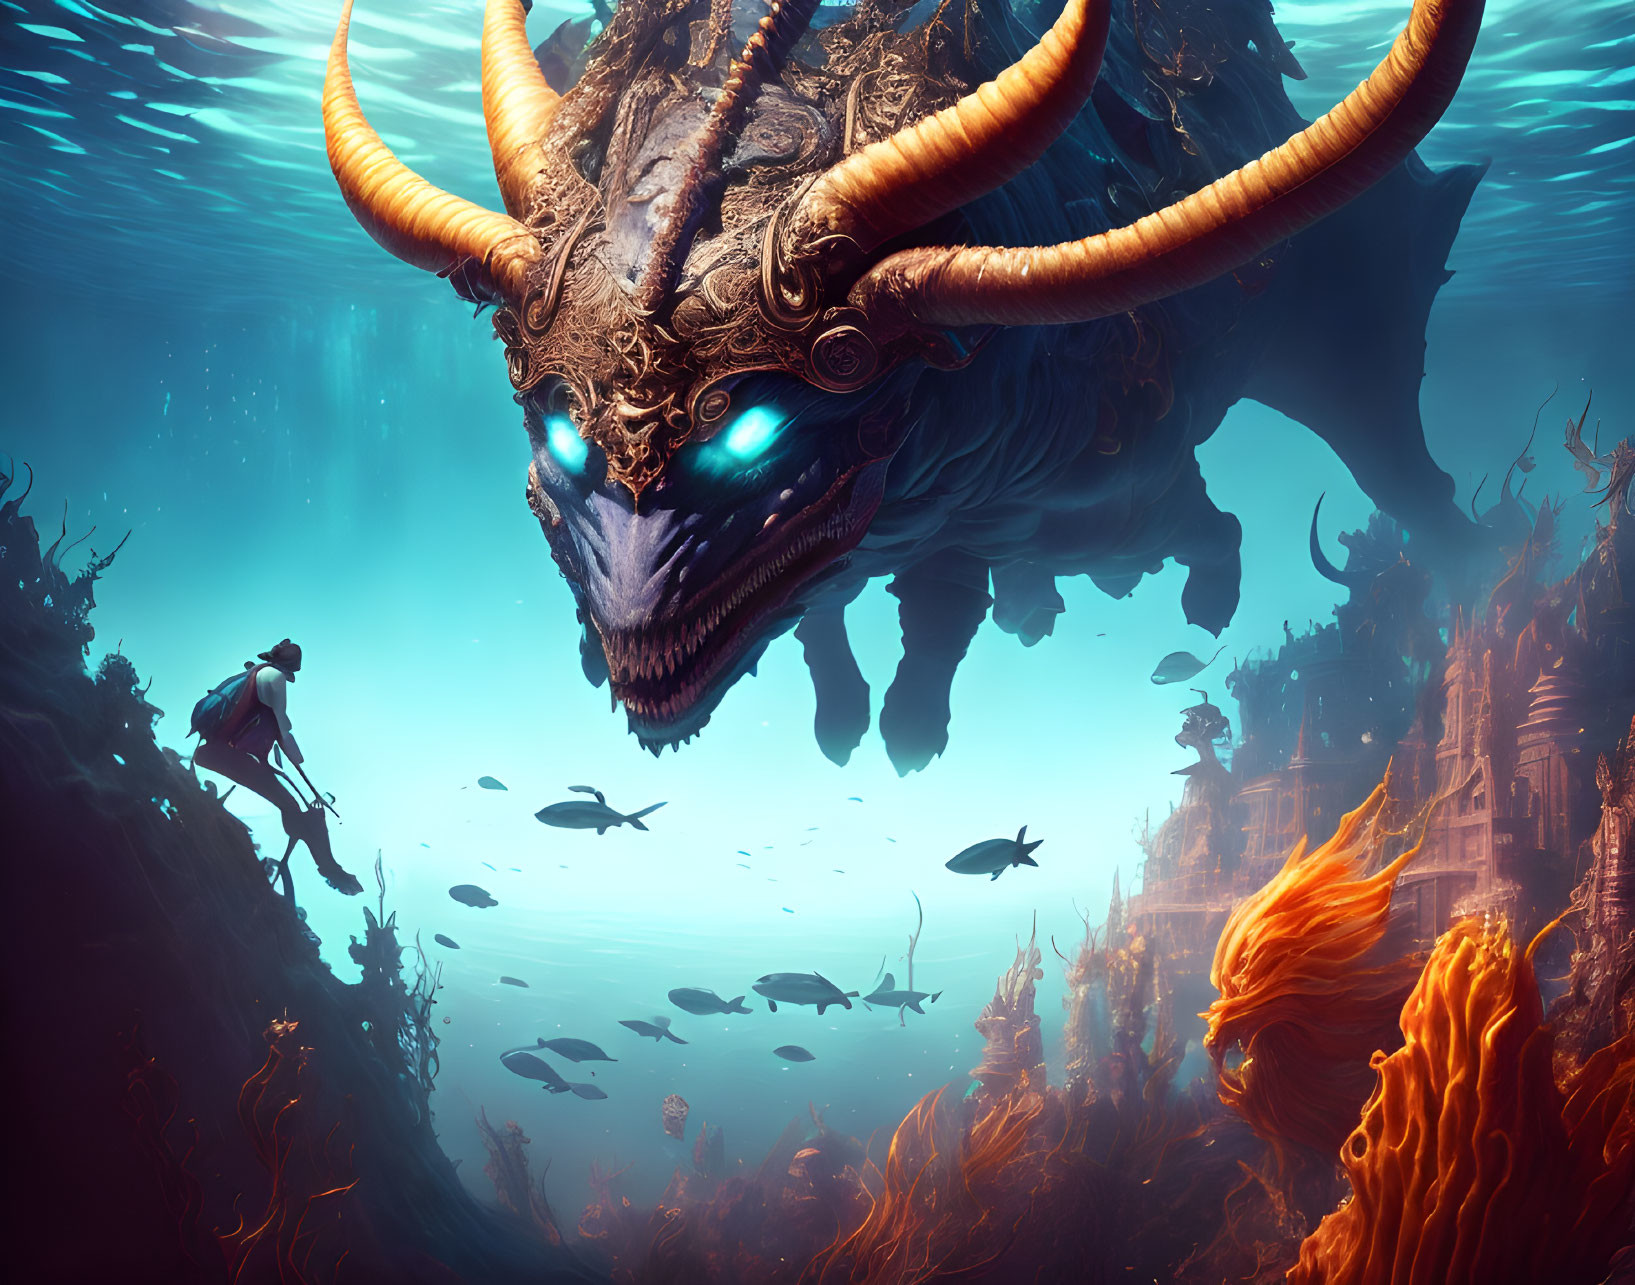 Gigantic ornate-horned sea creature near ancient sunken structure